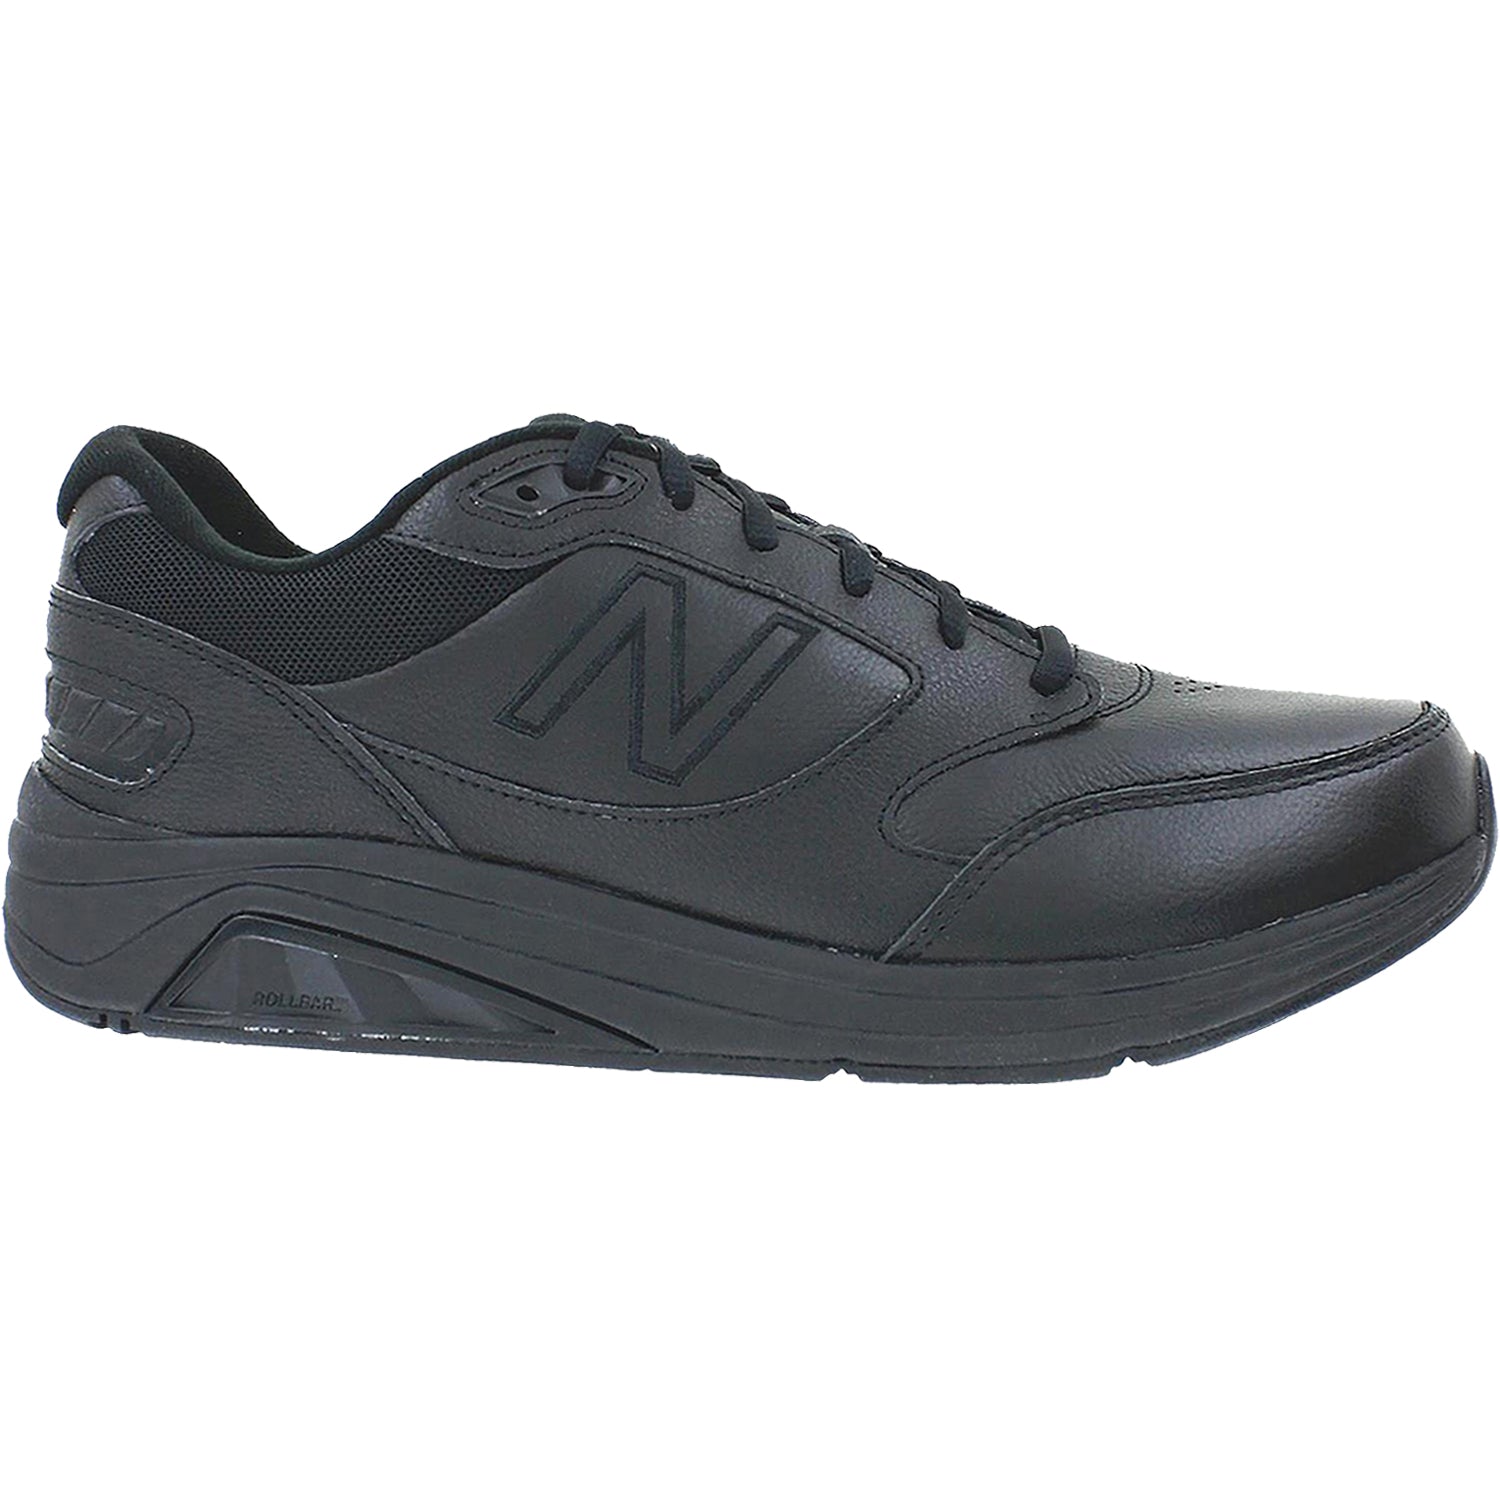 Preventie Ontwaken Injectie New Balance MW928v3 Black Leather Walking Shoes for Men – Footwear etc.